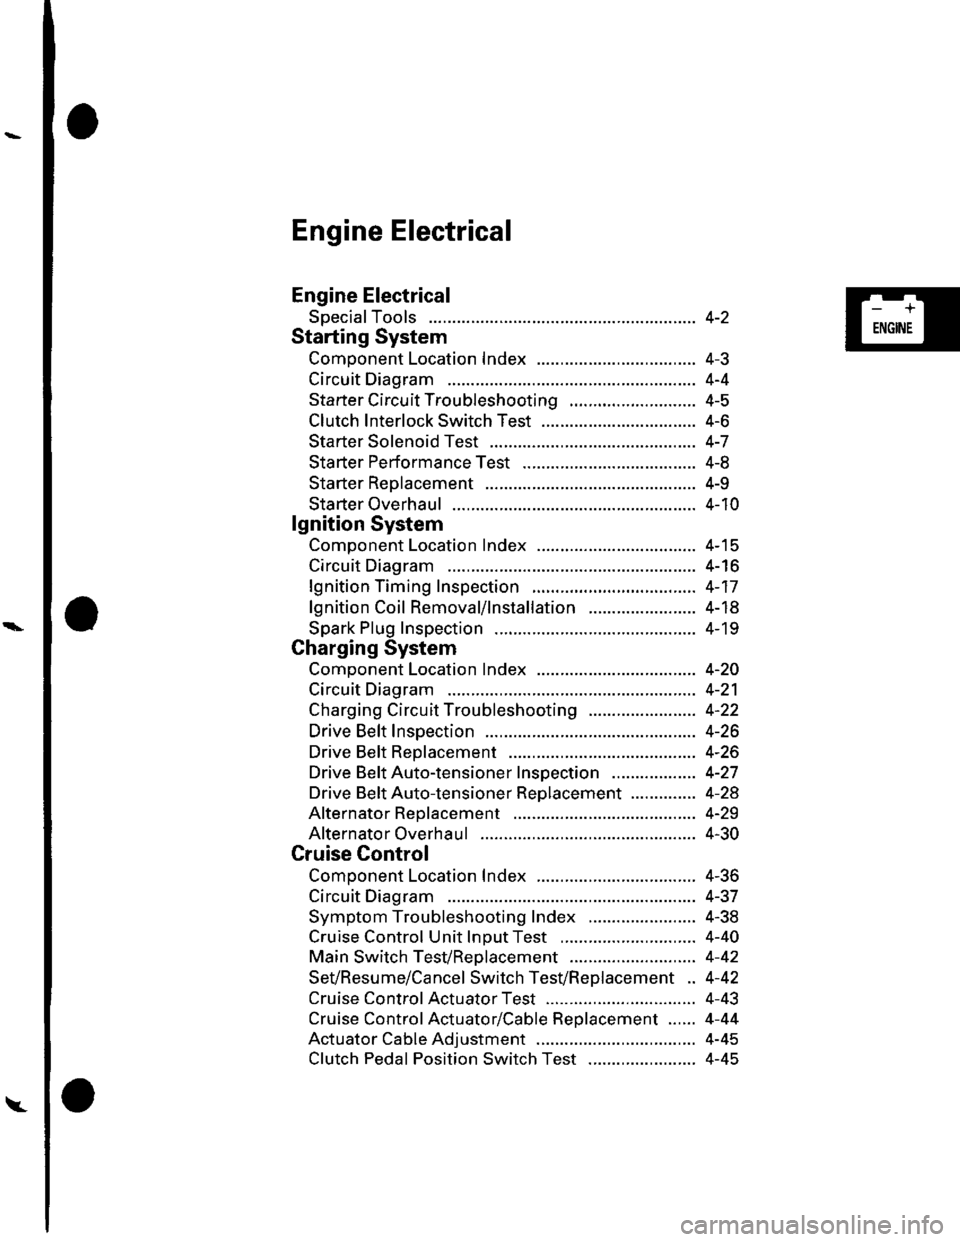 HONDA CIVIC 2002 7.G Workshop Manual \.
Engine Electrical
Engine Electrical
SpecialTools
Starting System
Comoonent Location Index ...............
Circuit Diagram
Starter Circu it Troubleshooting
Clutch Interlock Switch Test
Starter Solen